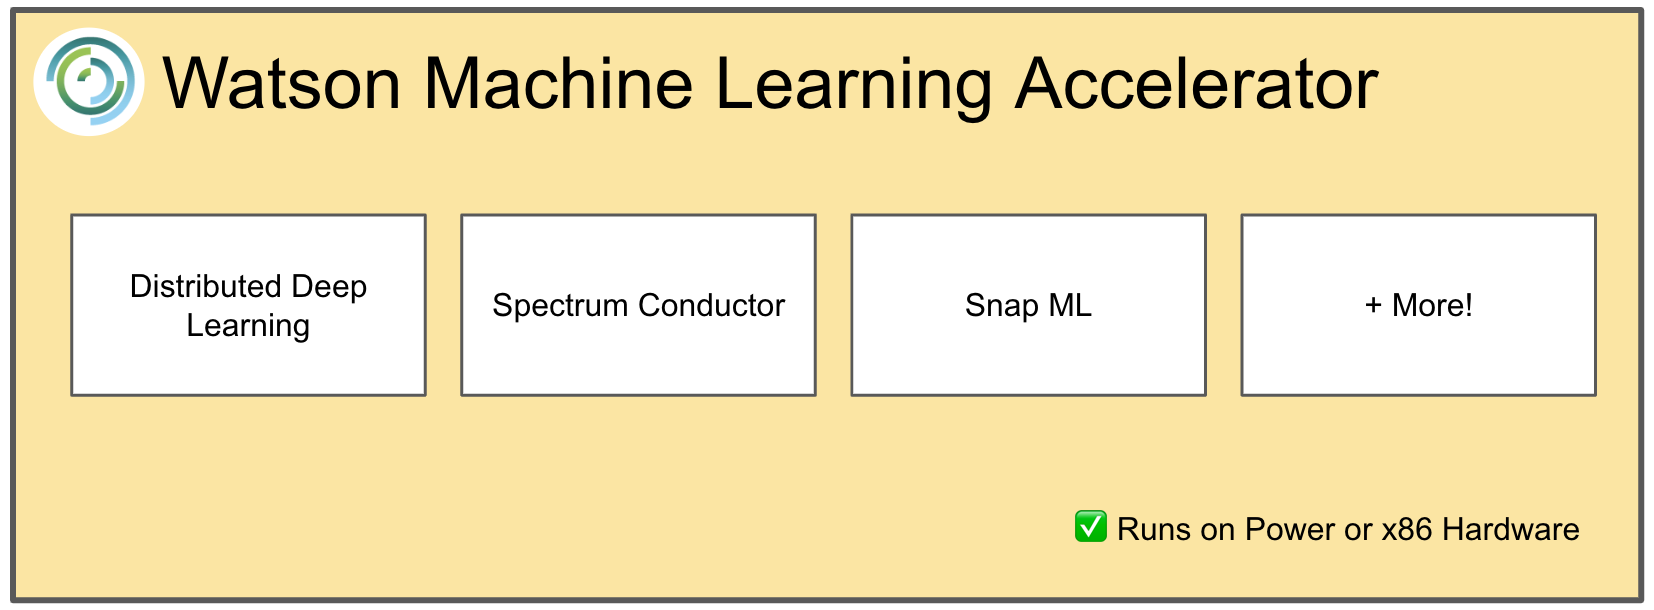 Watson Machine Learning Accelerator